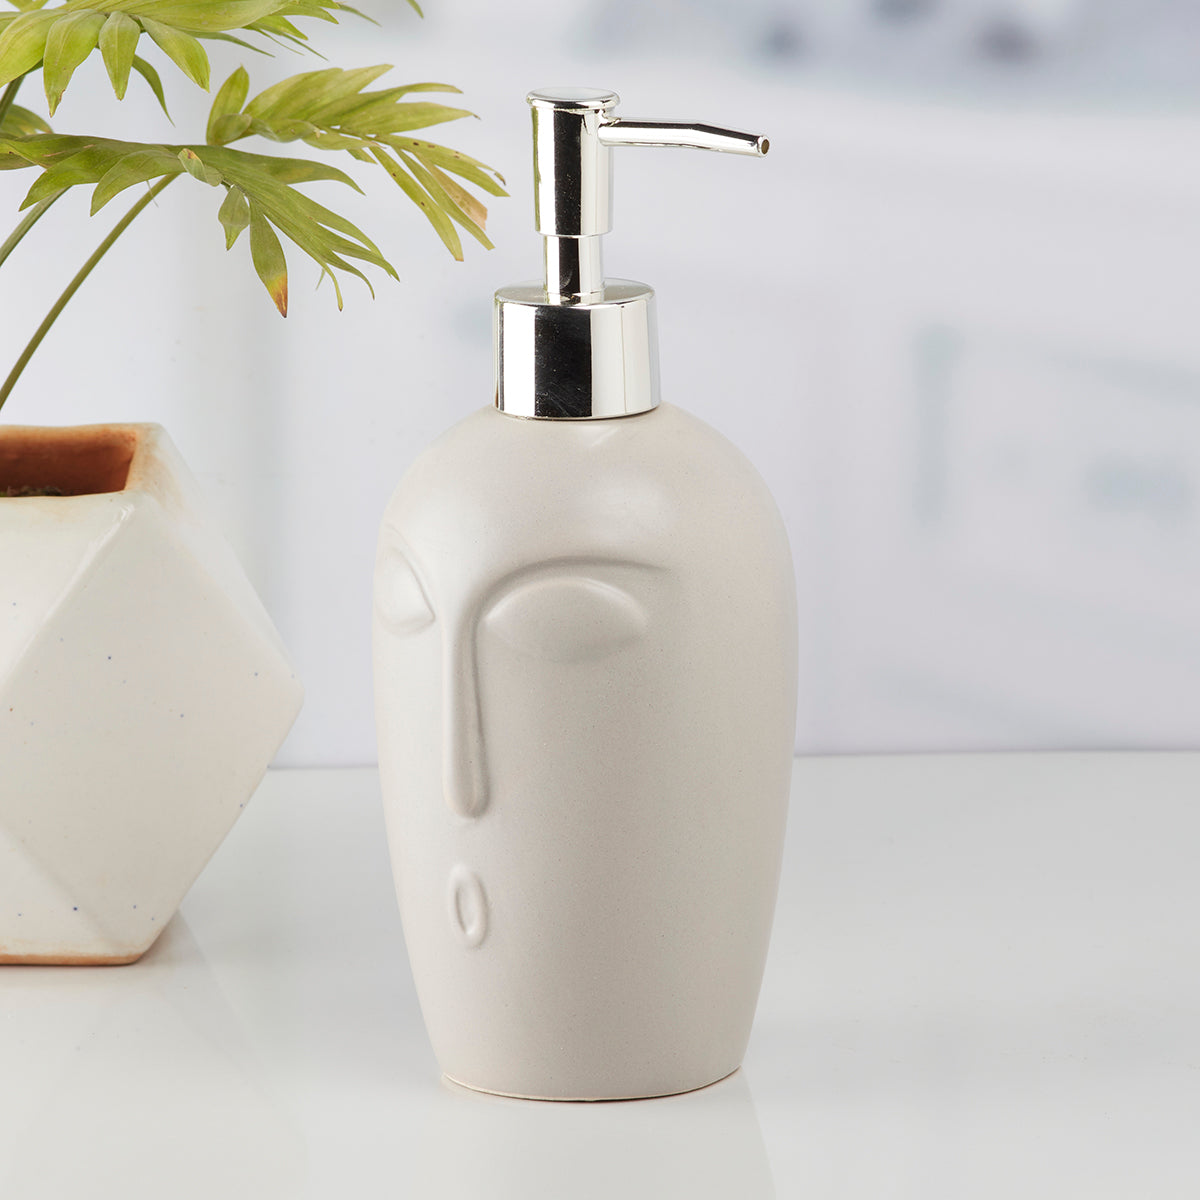 Ceramic Soap Dispenser Pump for Bathroom for Bath Gel, Lotion, Shampoo (8032)